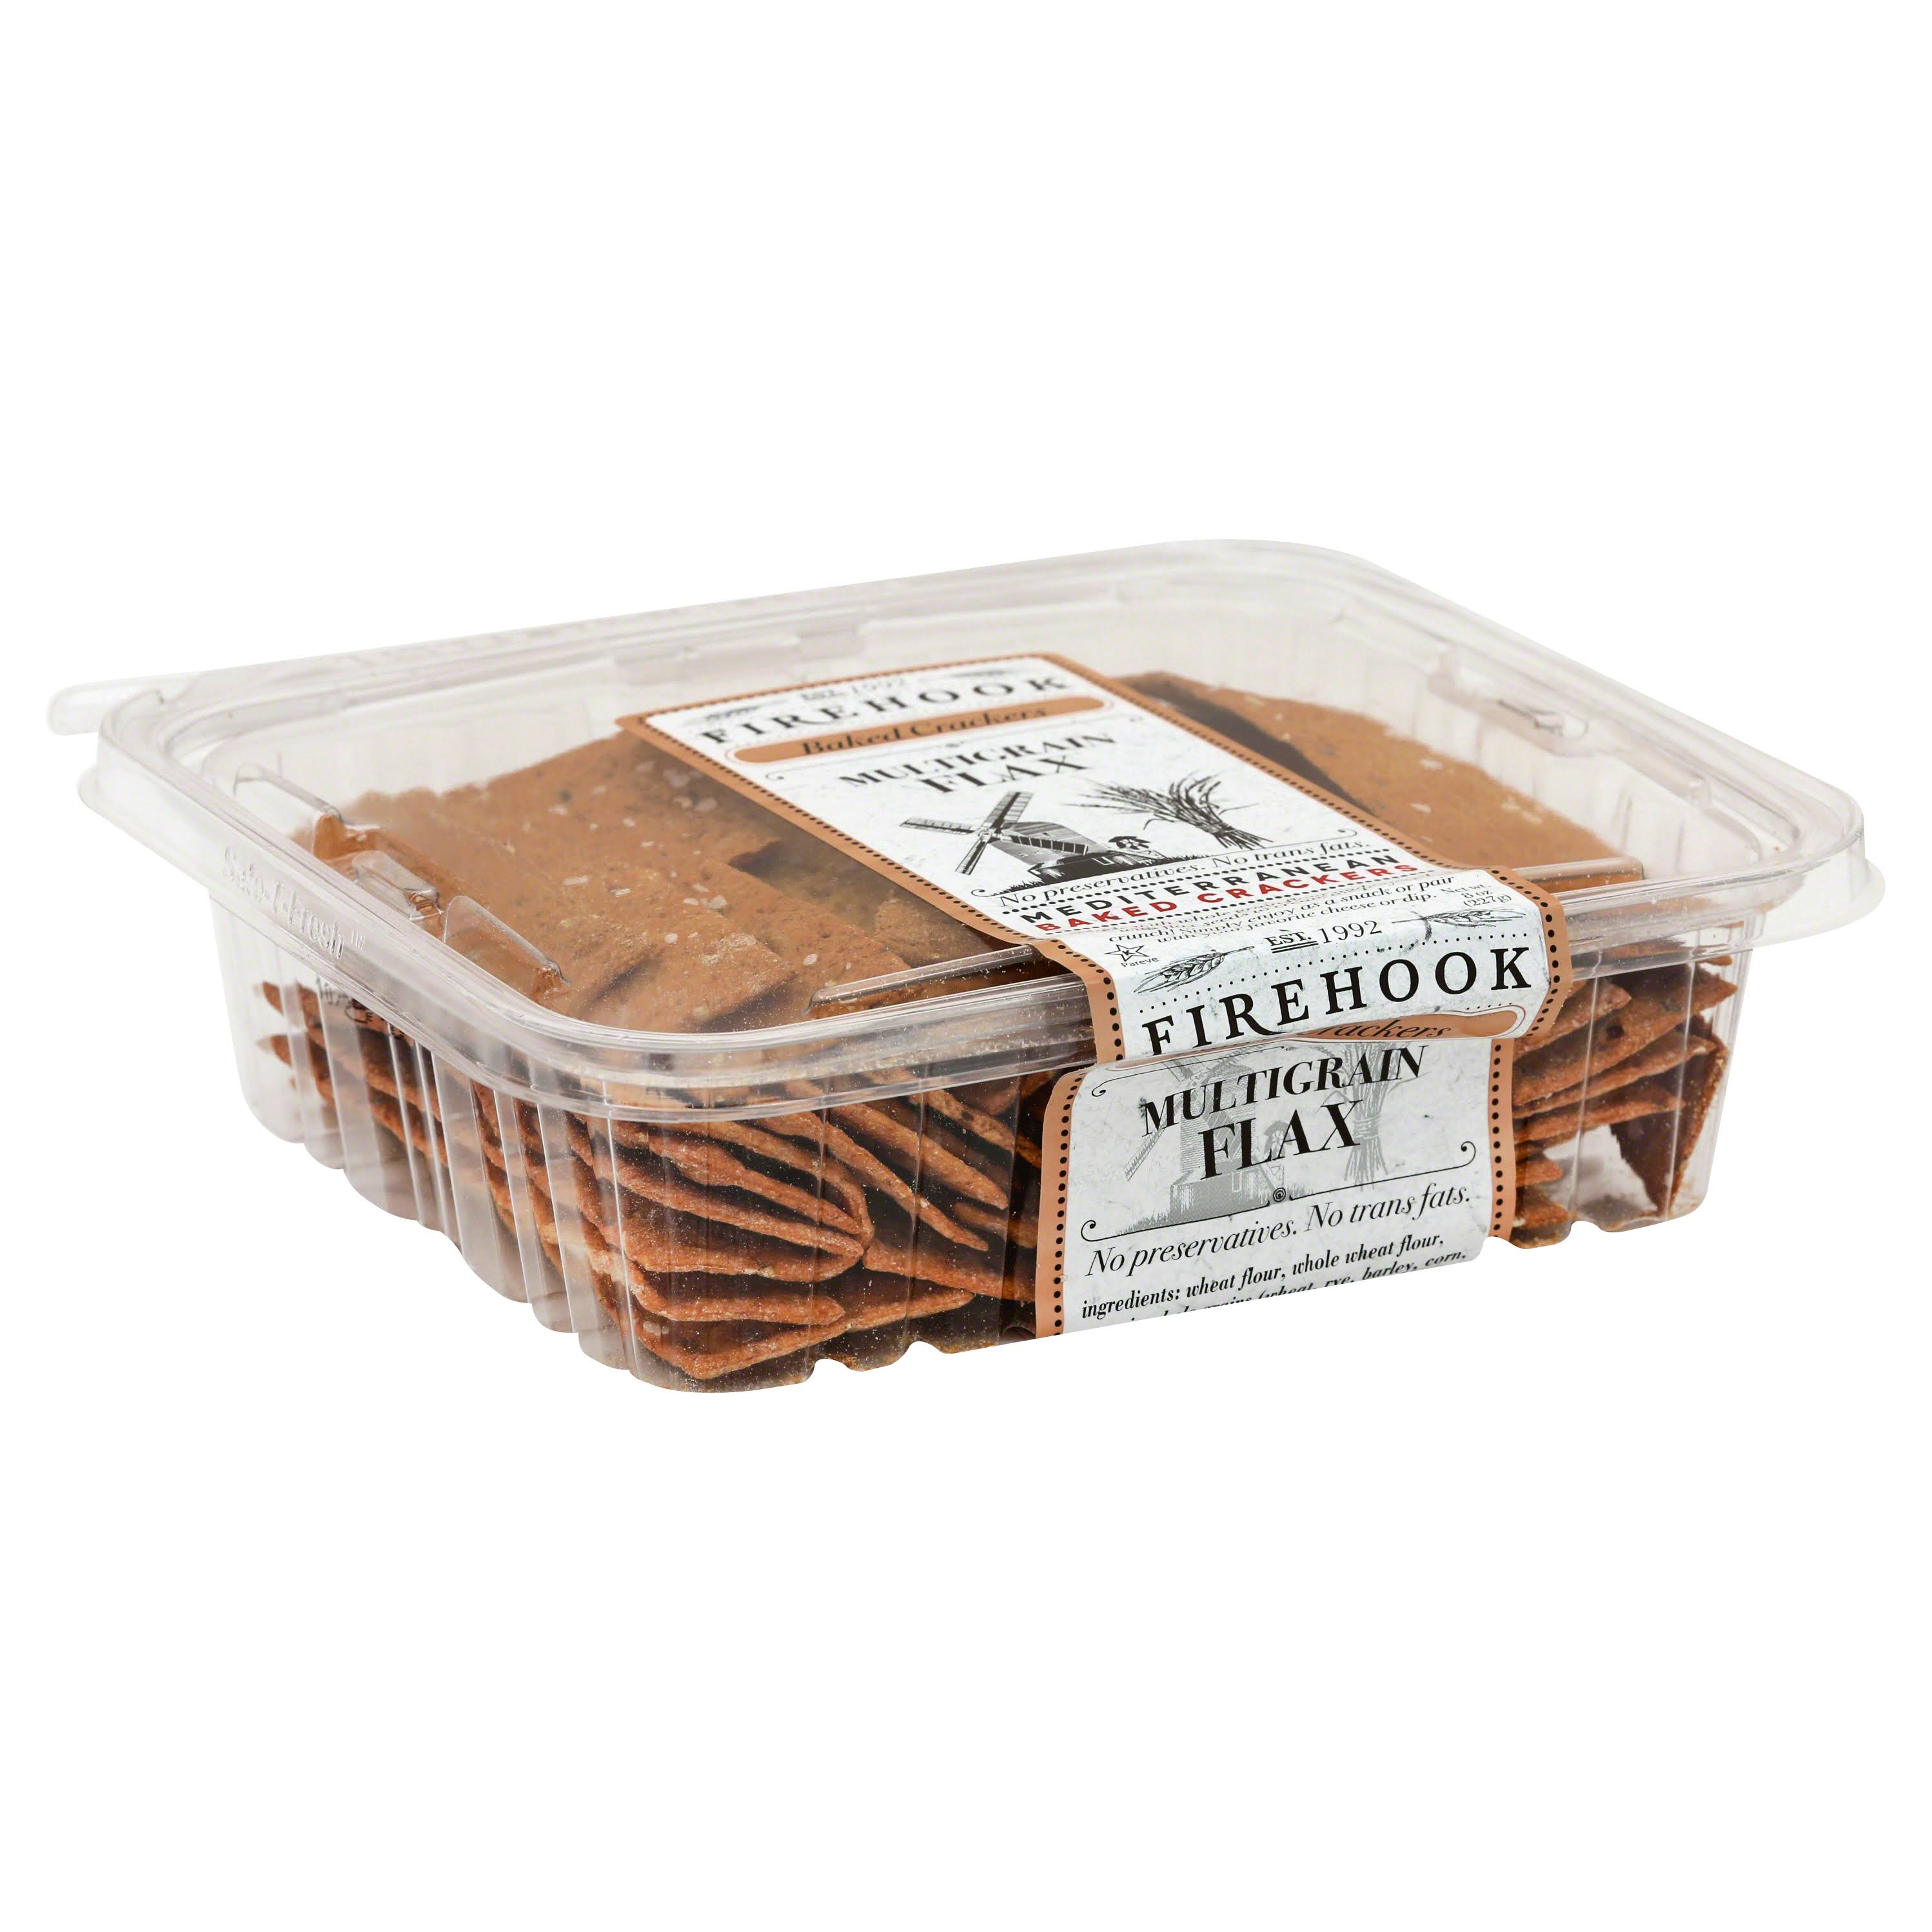 Firehook Mediterranean Baked Crackers - Multigrain Flax, 8 Oz